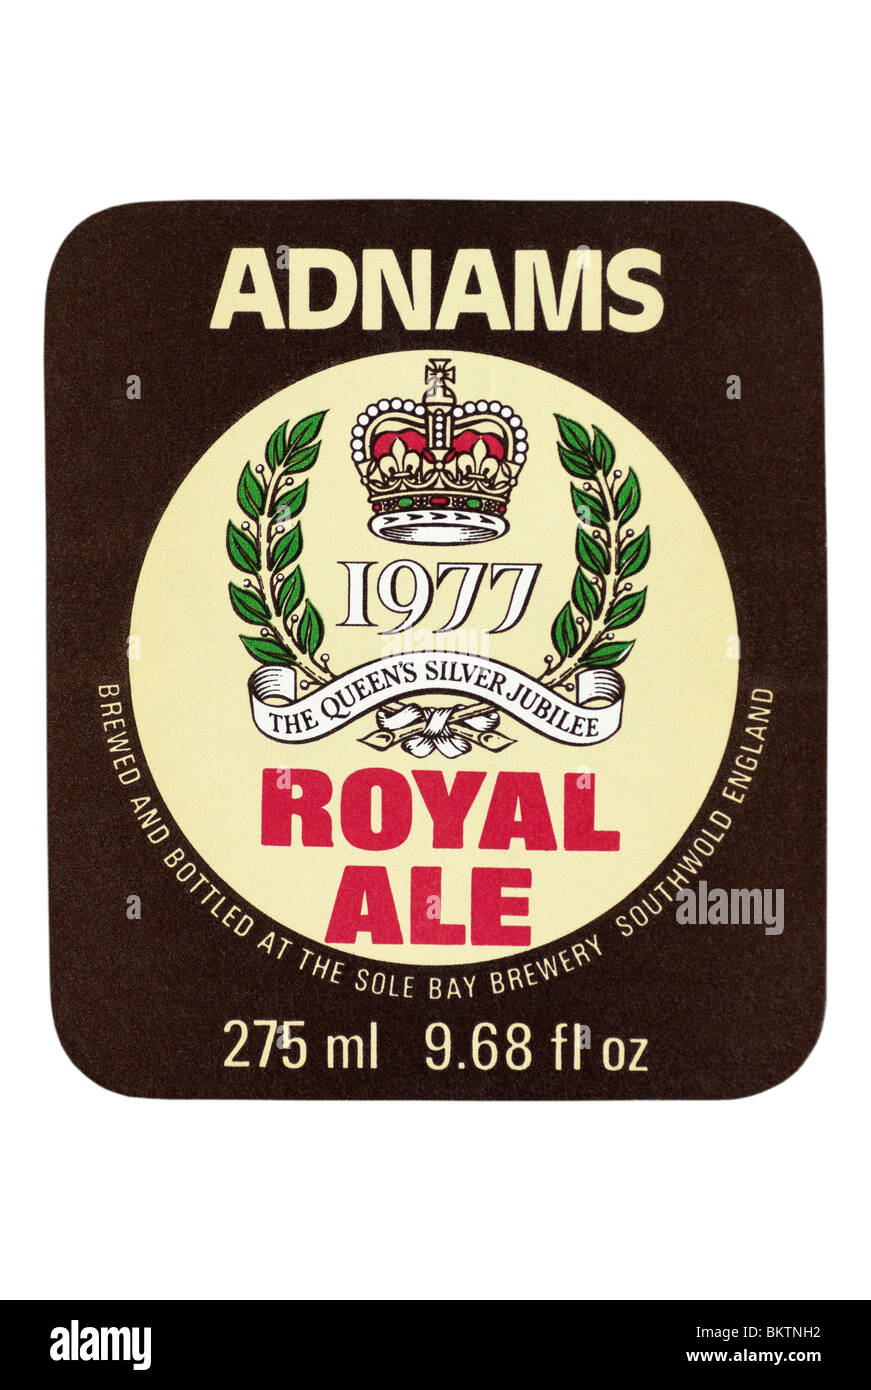 Adnams 1977 Queens Silver Jubilee Royal Ale etichetta del flacone. Foto Stock